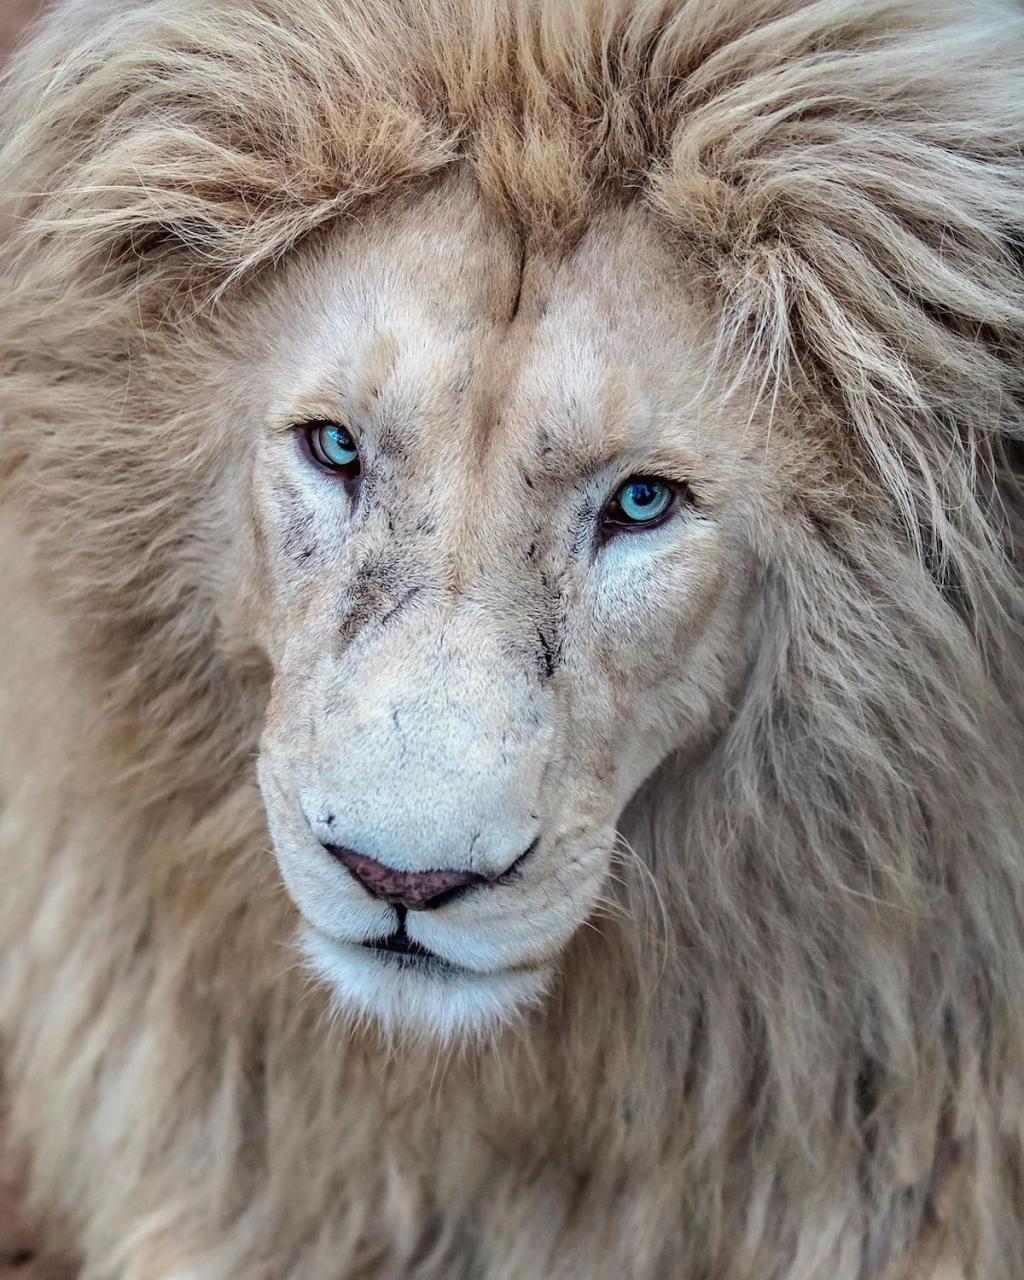 Lion Photographs by Simon Needham